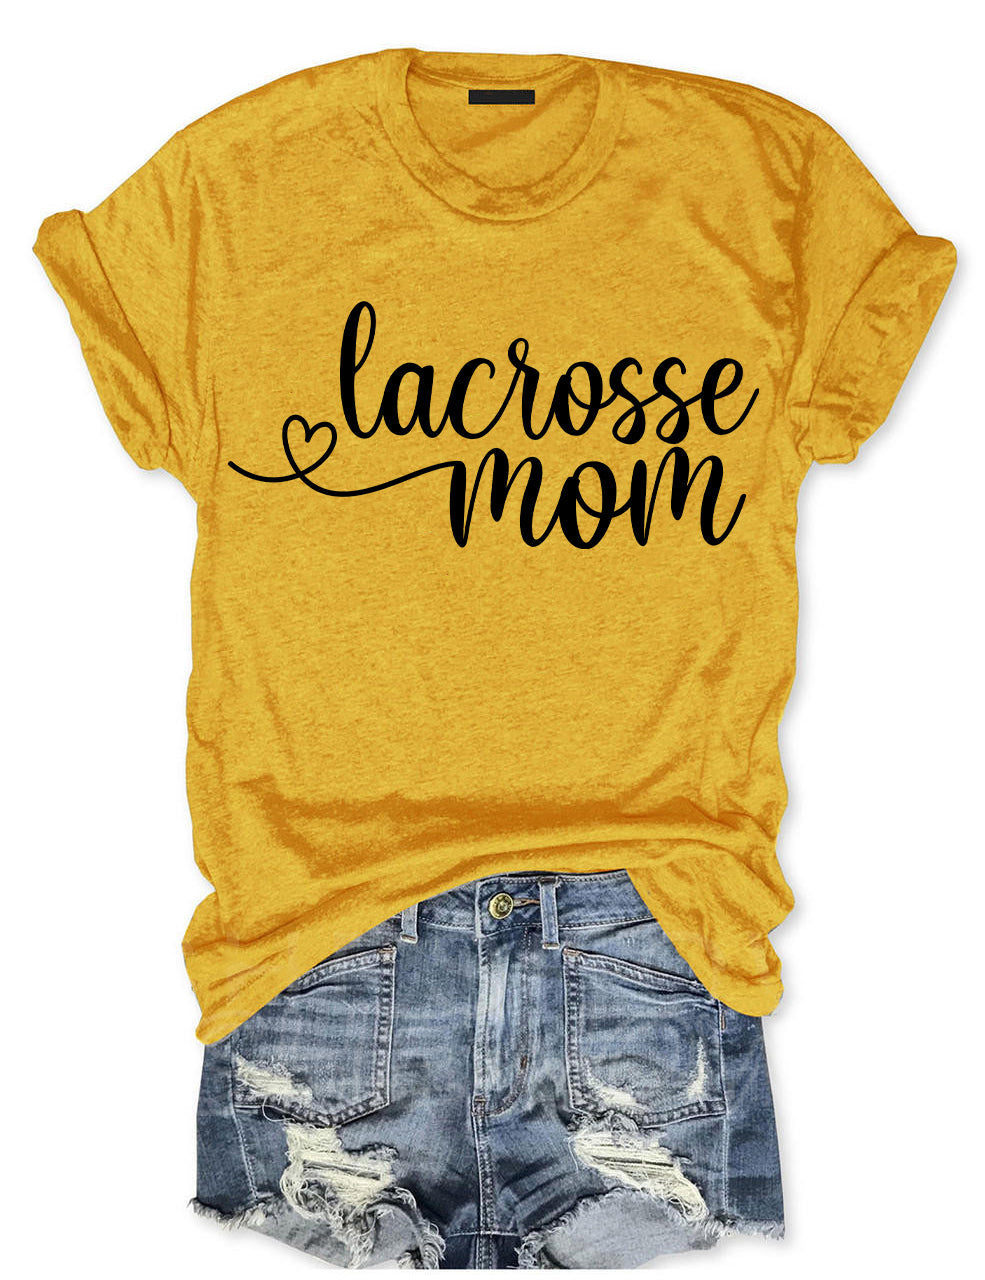 Lacrosse mom T-shirt